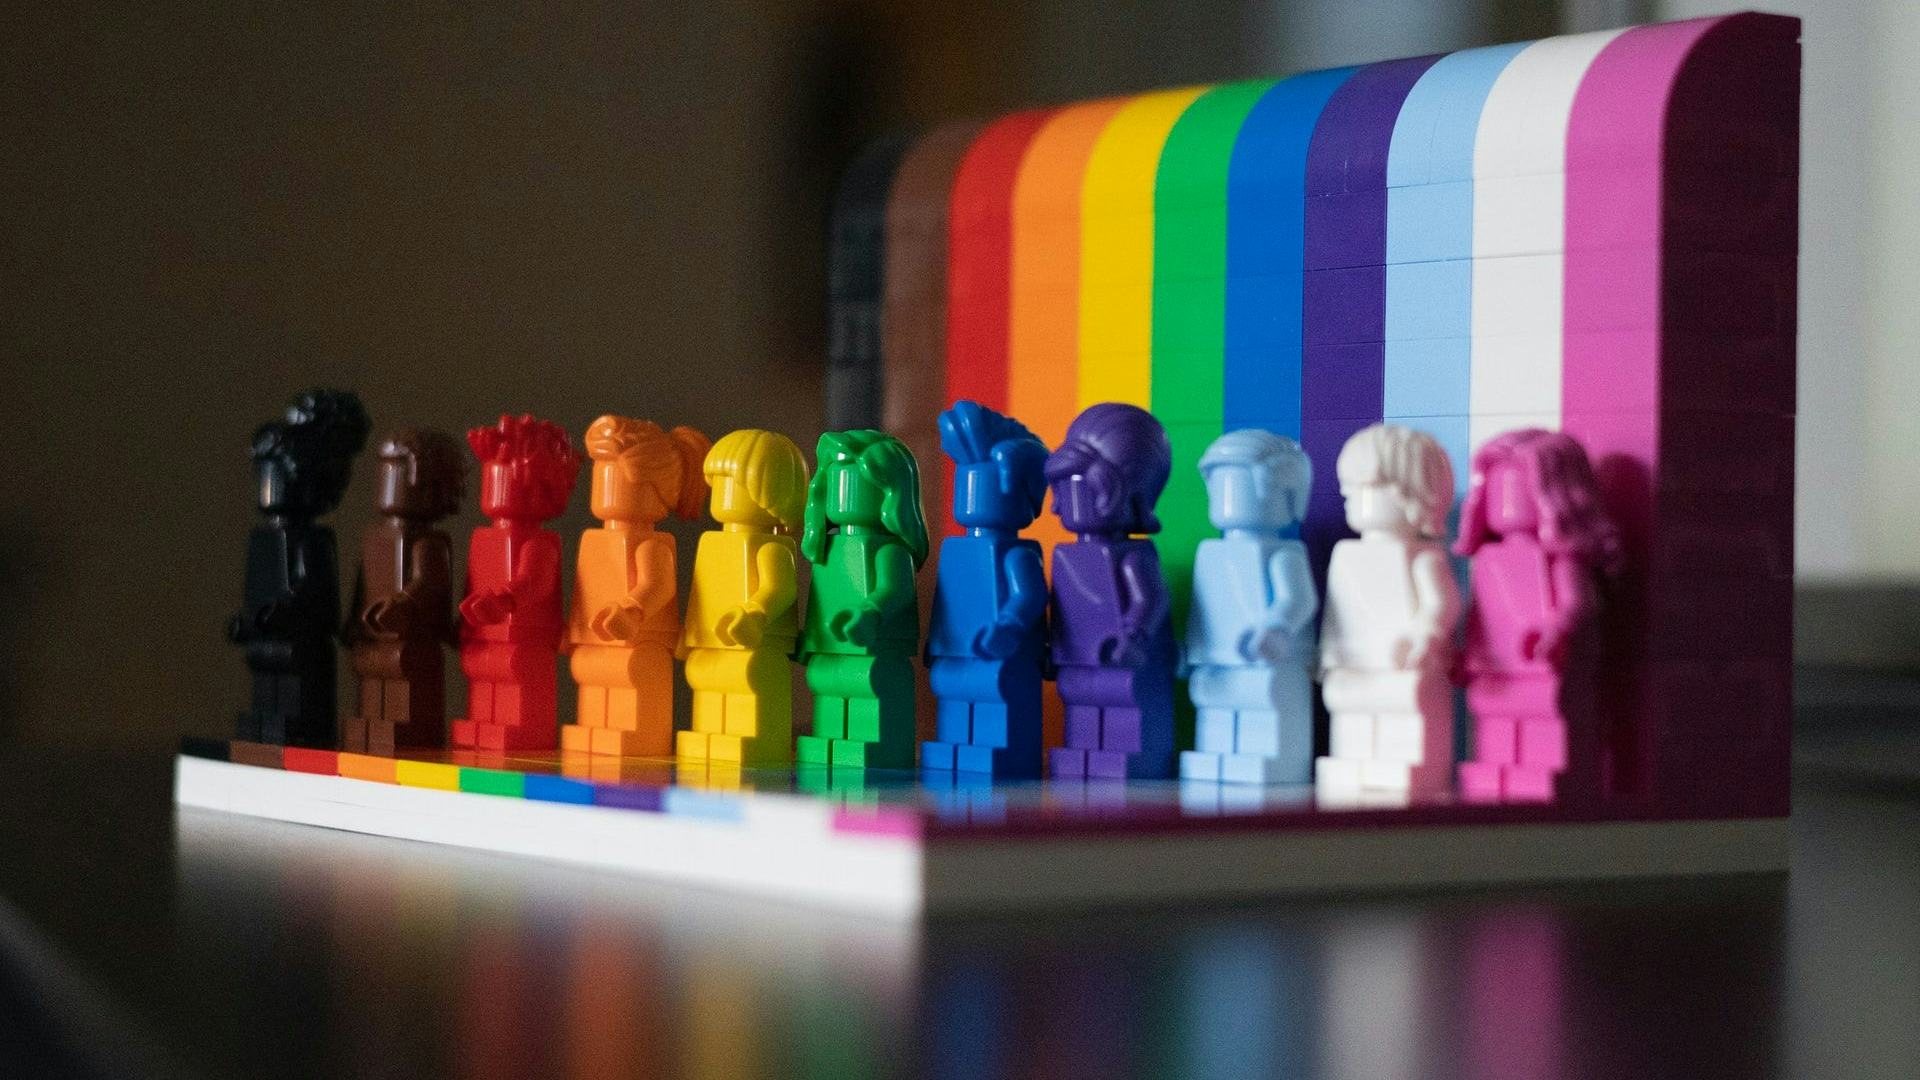 Lego rainbow figures